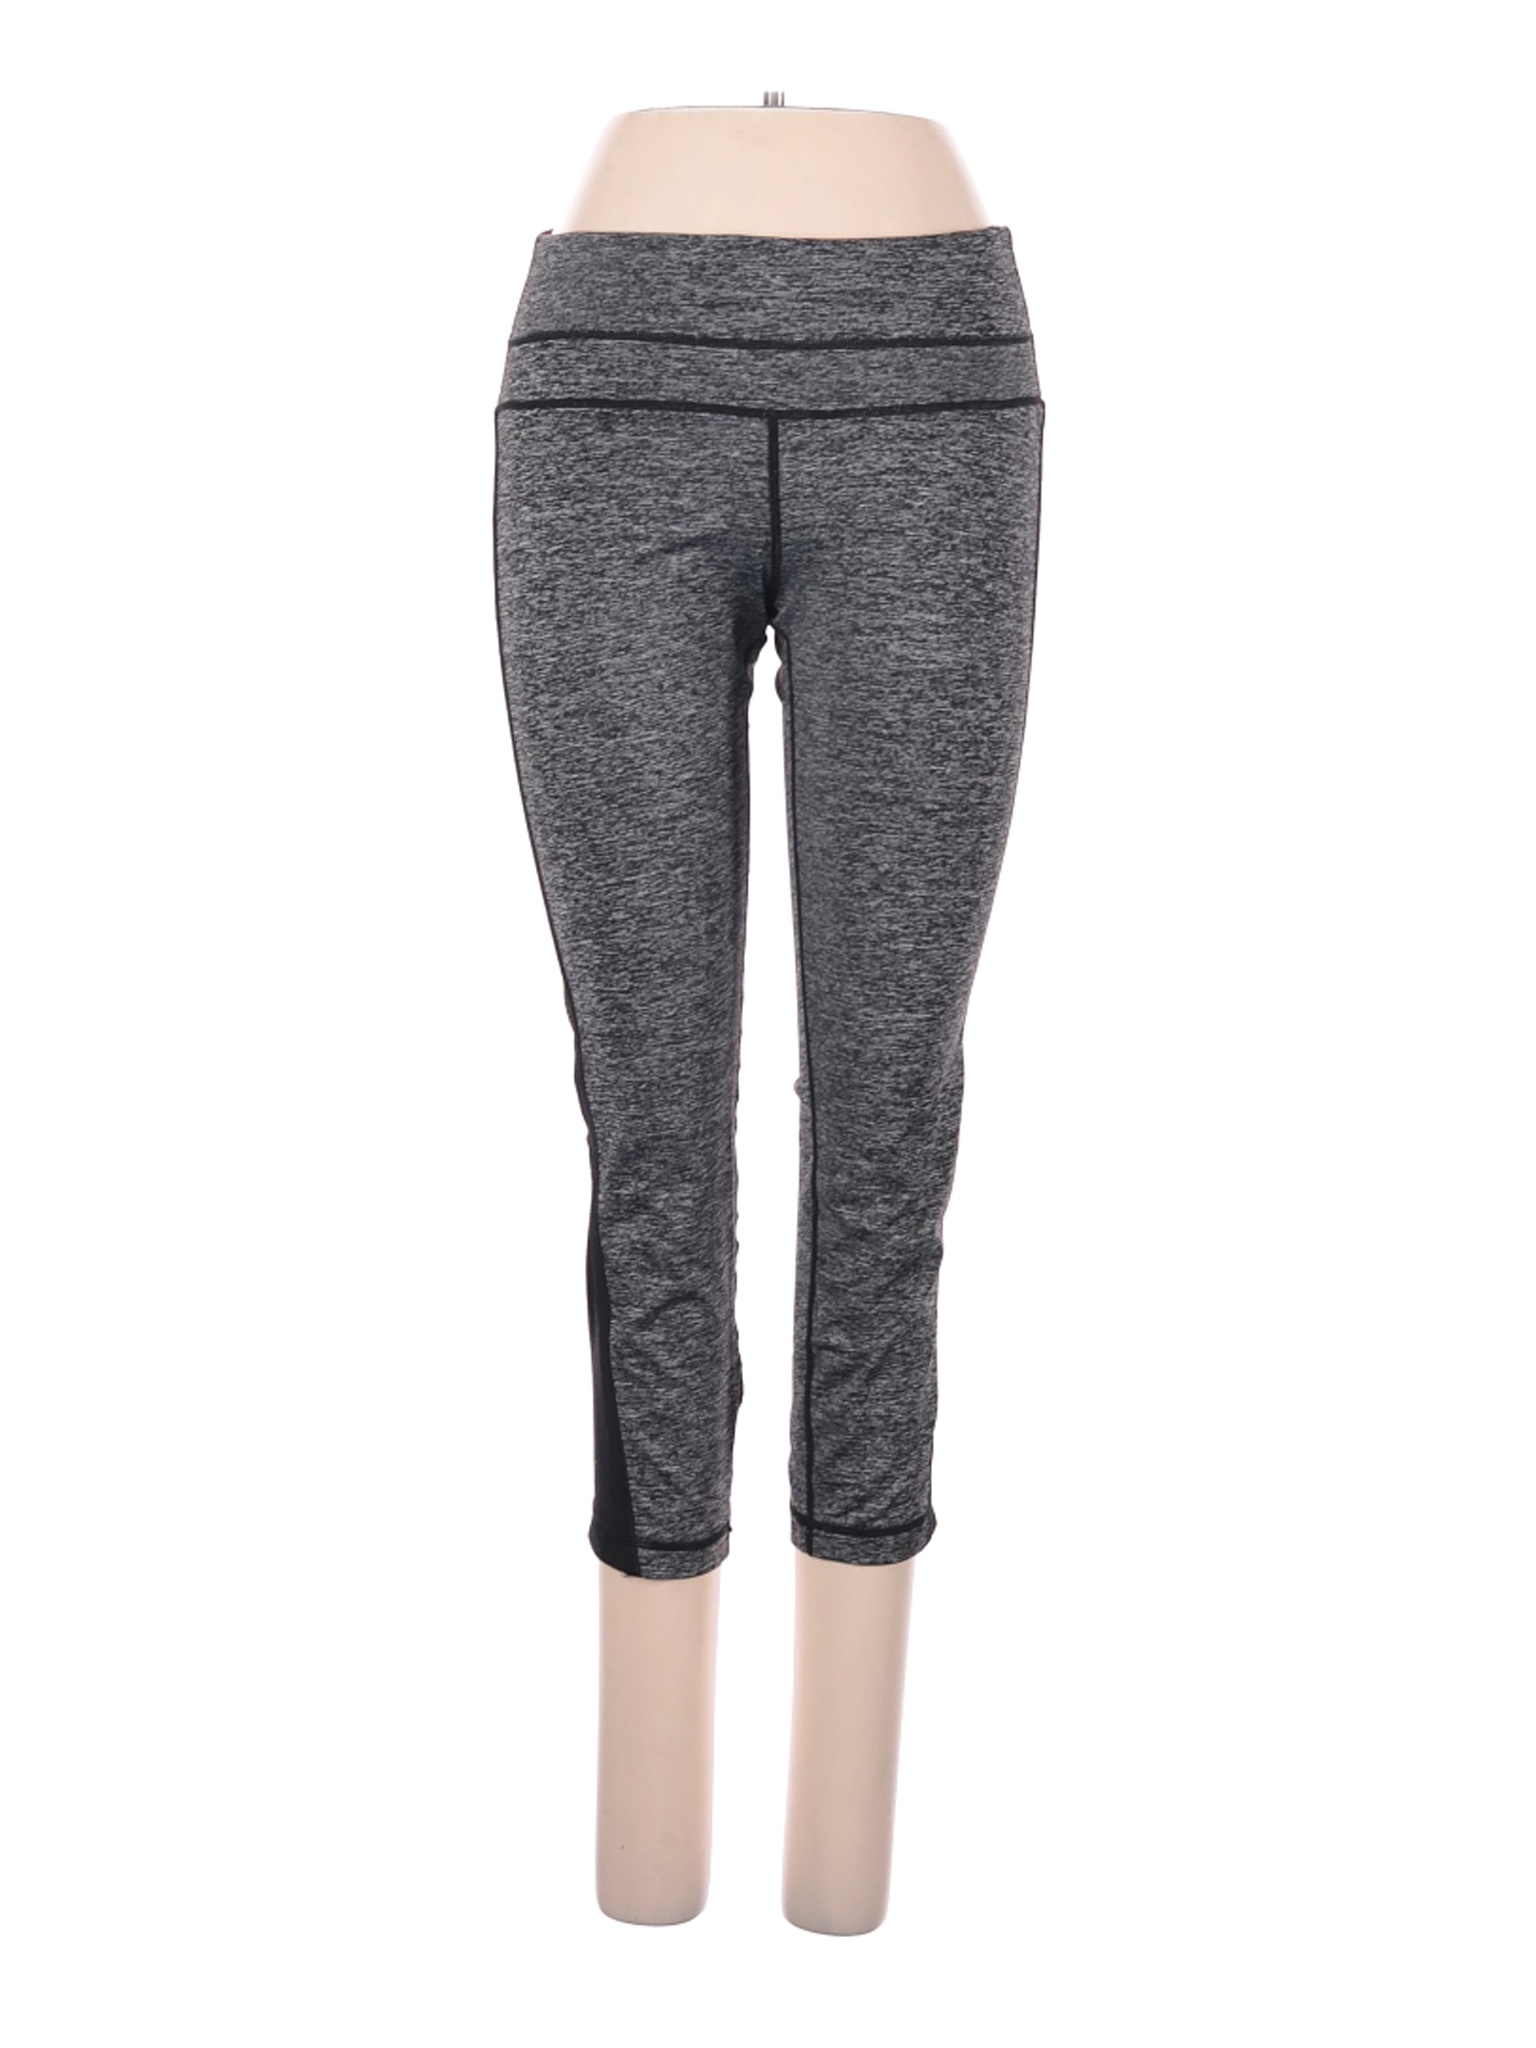 90 Degree by Reflex Women Gray Active Pants S | eBay